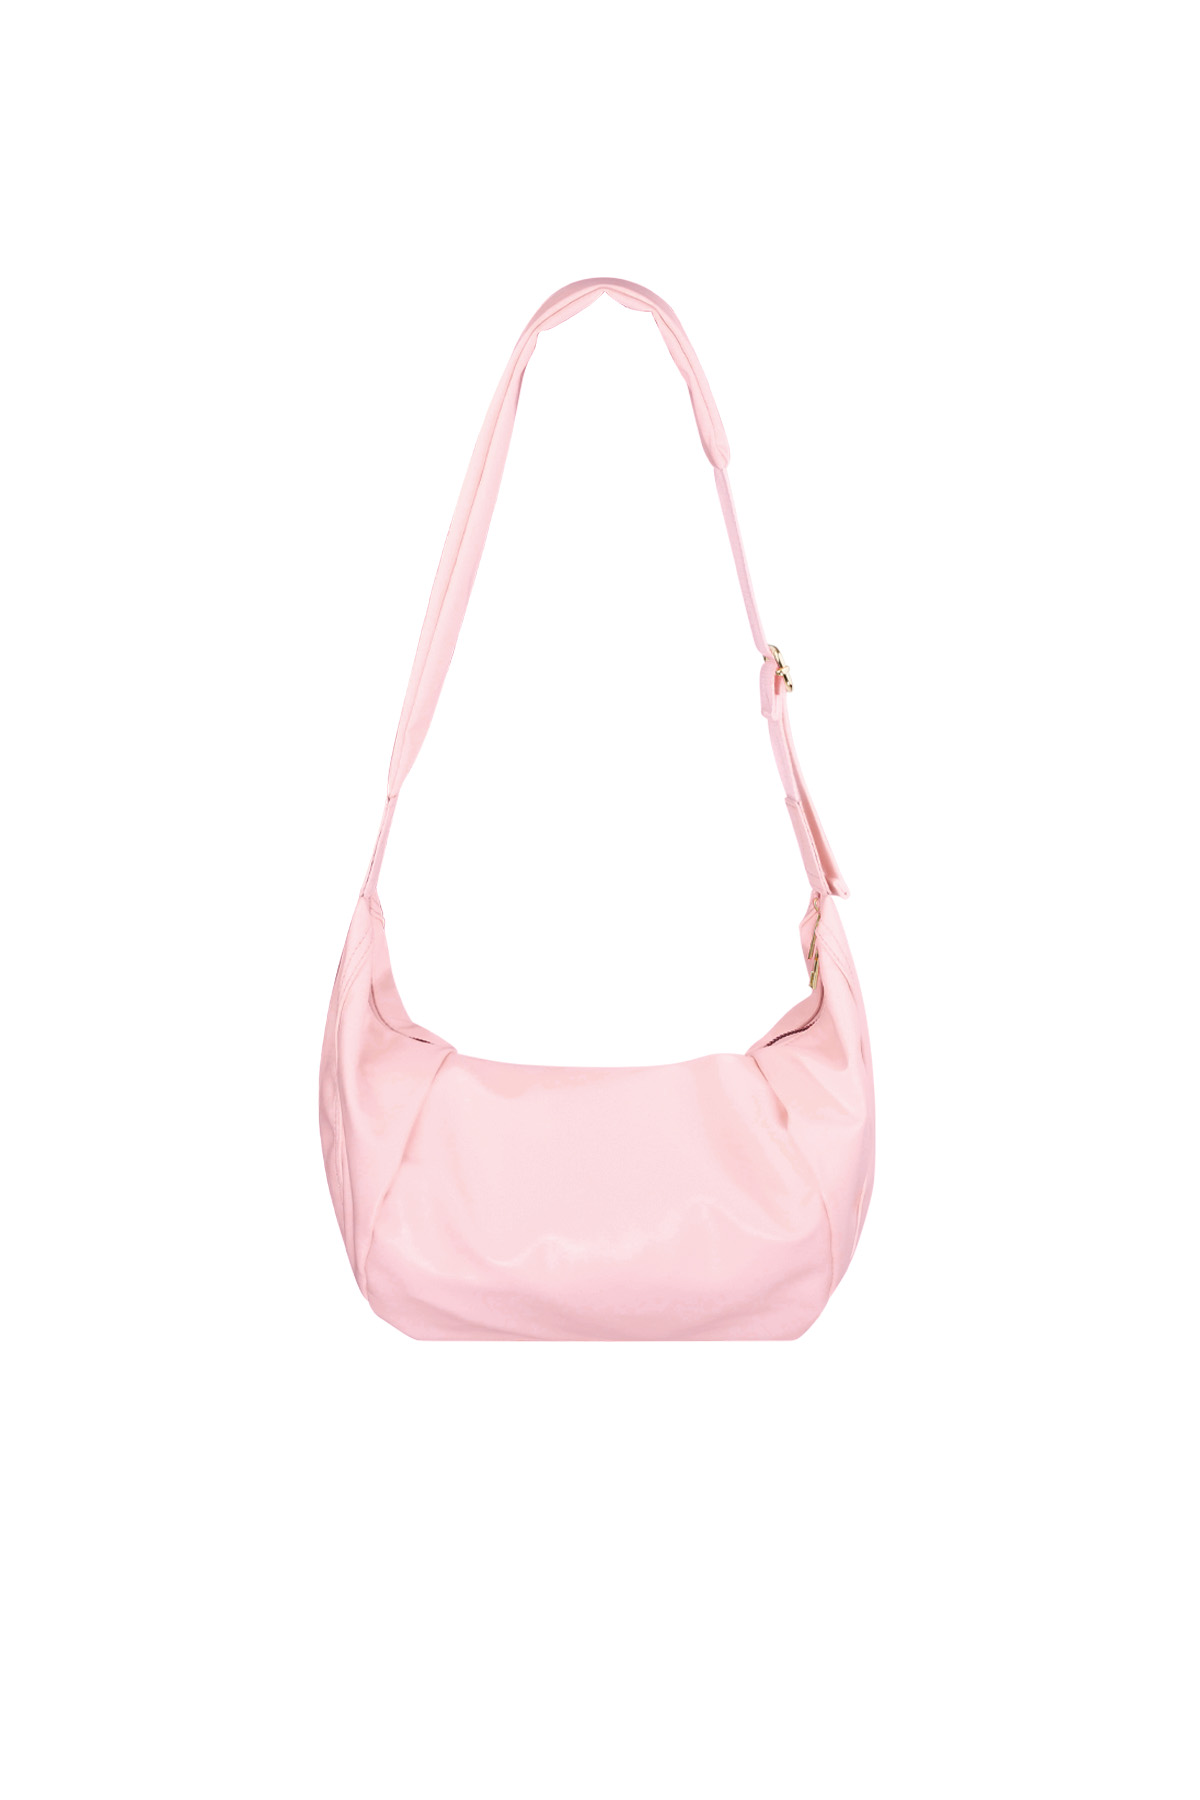 Love on top bag - pink